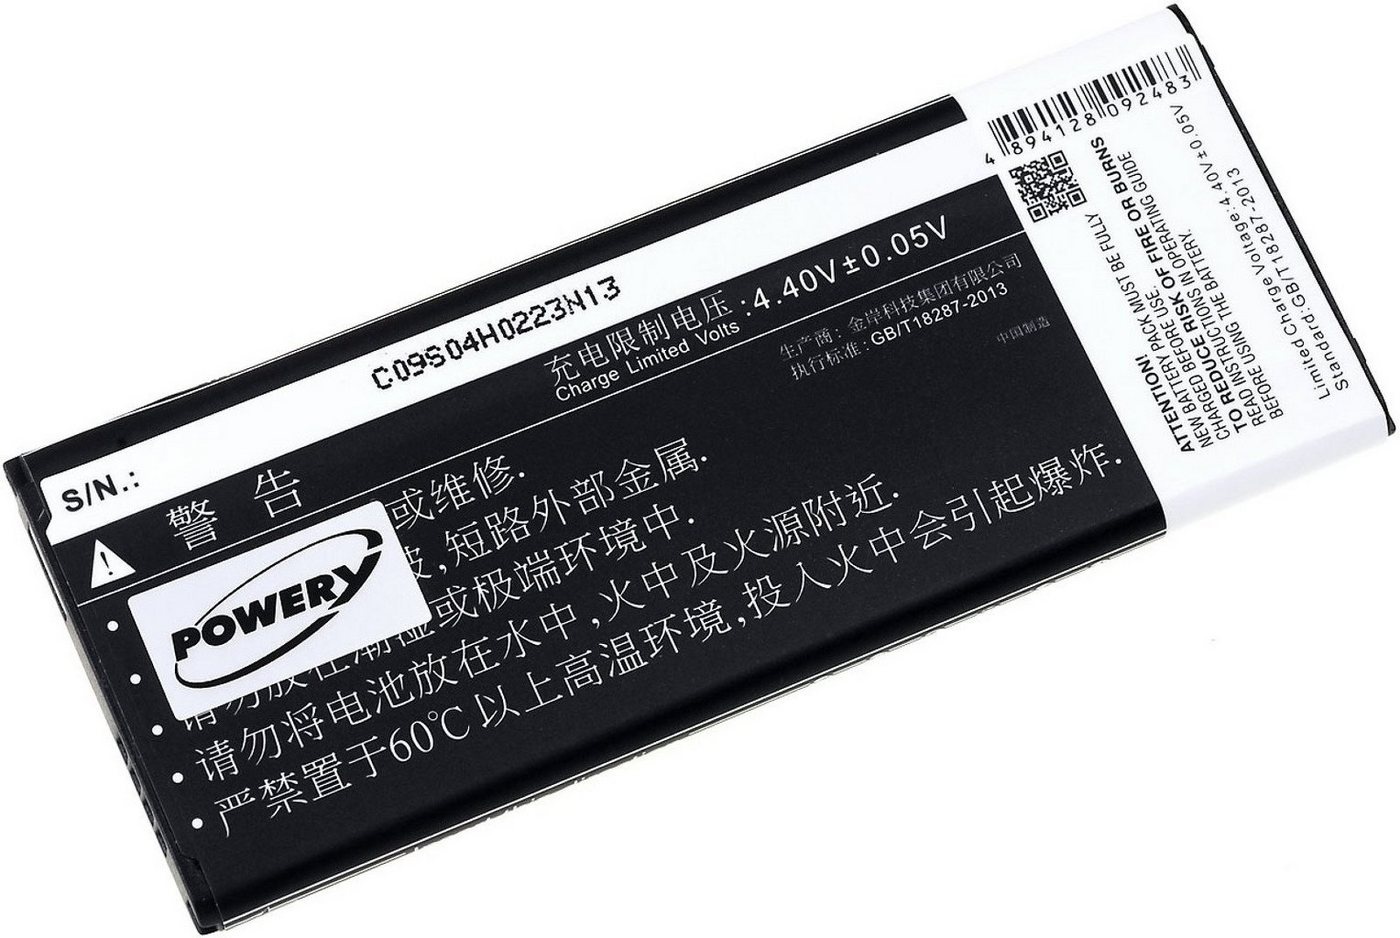 Powery Standardakku für Samsung SM-N9108V mit NFC-Chip Smartphone-Akku 3000 mAh (3.85 V) schwarz